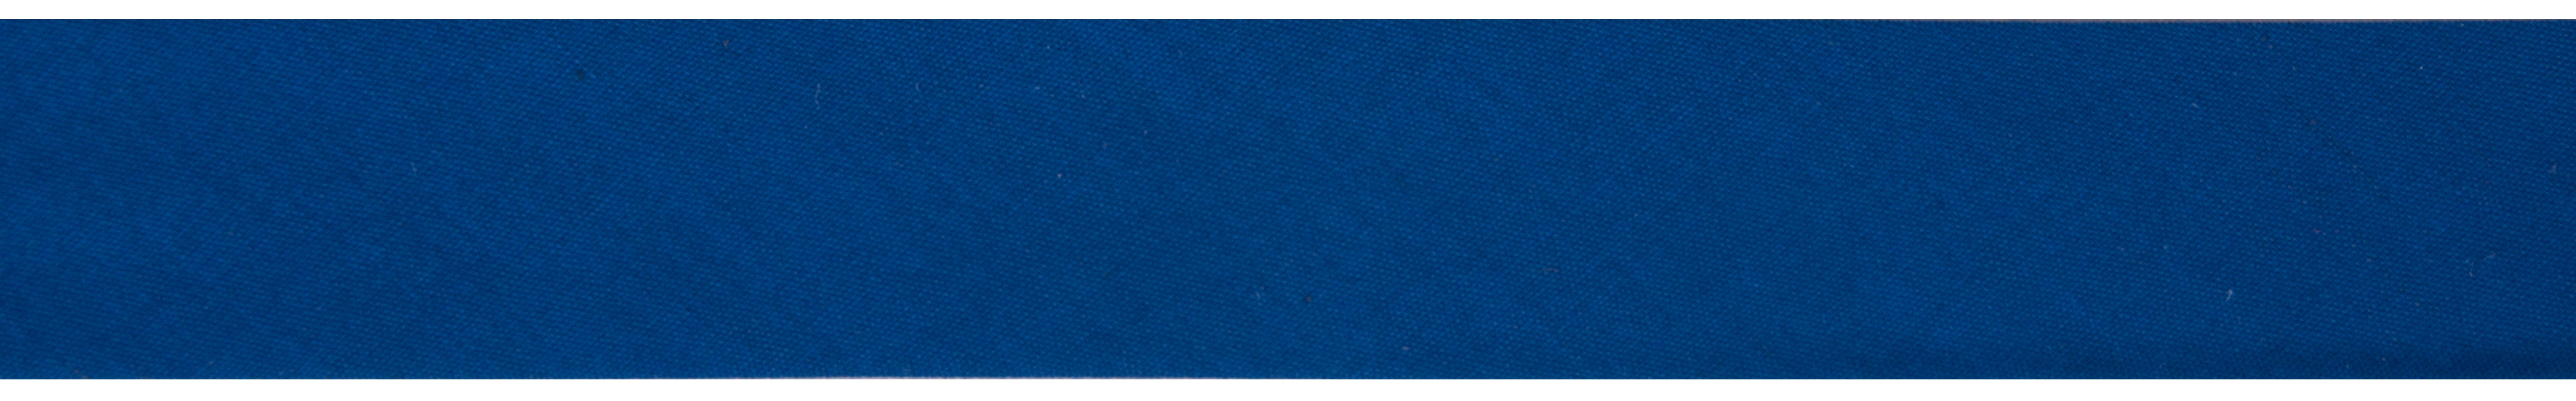 Royal Blue Bias Binding | Narrow from Jaycotts Sewing Supplies